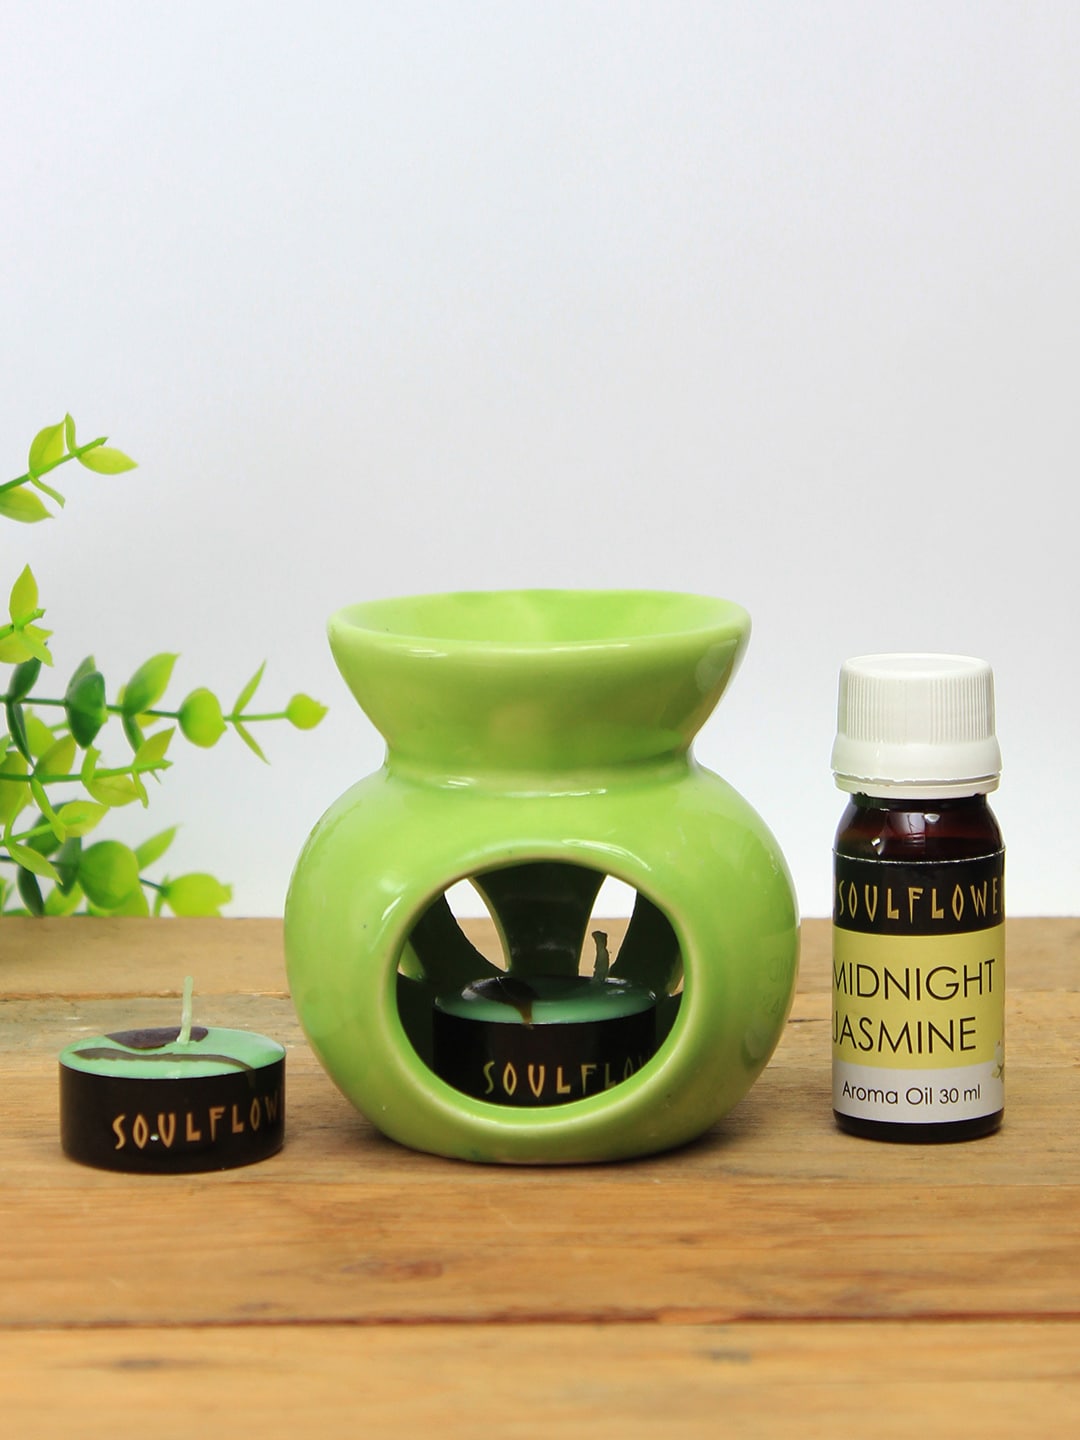 Soulflower Green Midnight Jasmine Aroma Oil Diffuser 30 ml Price in India